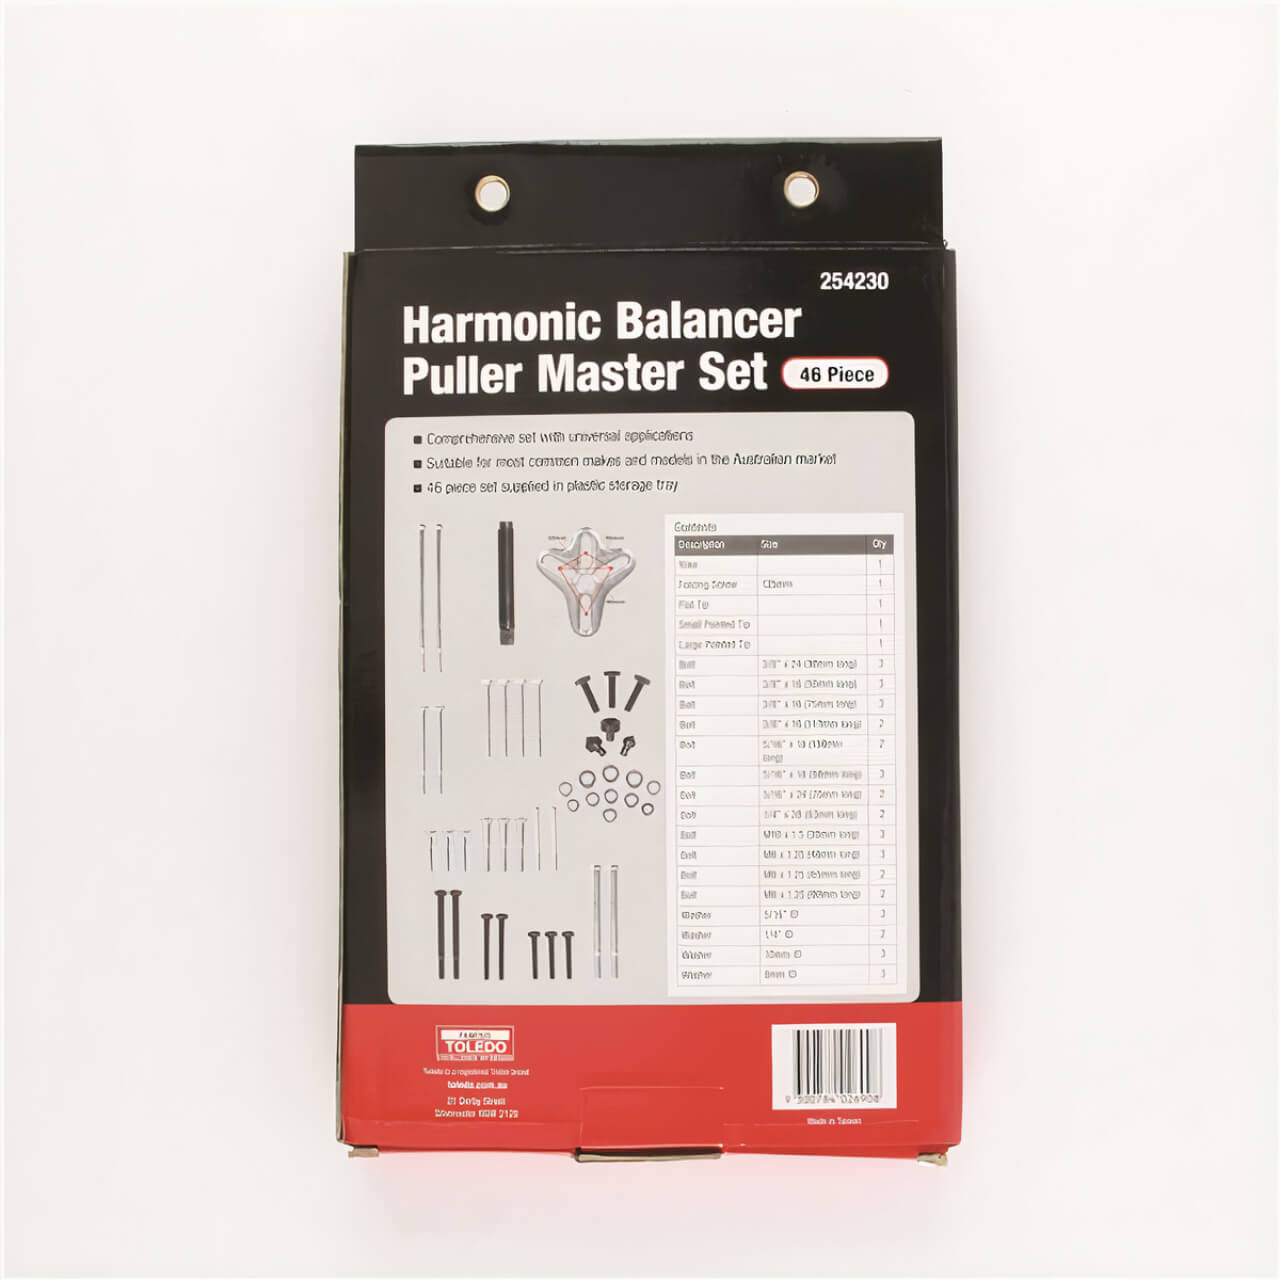 Toledo Harmonic Balancer Puller Set 46pce